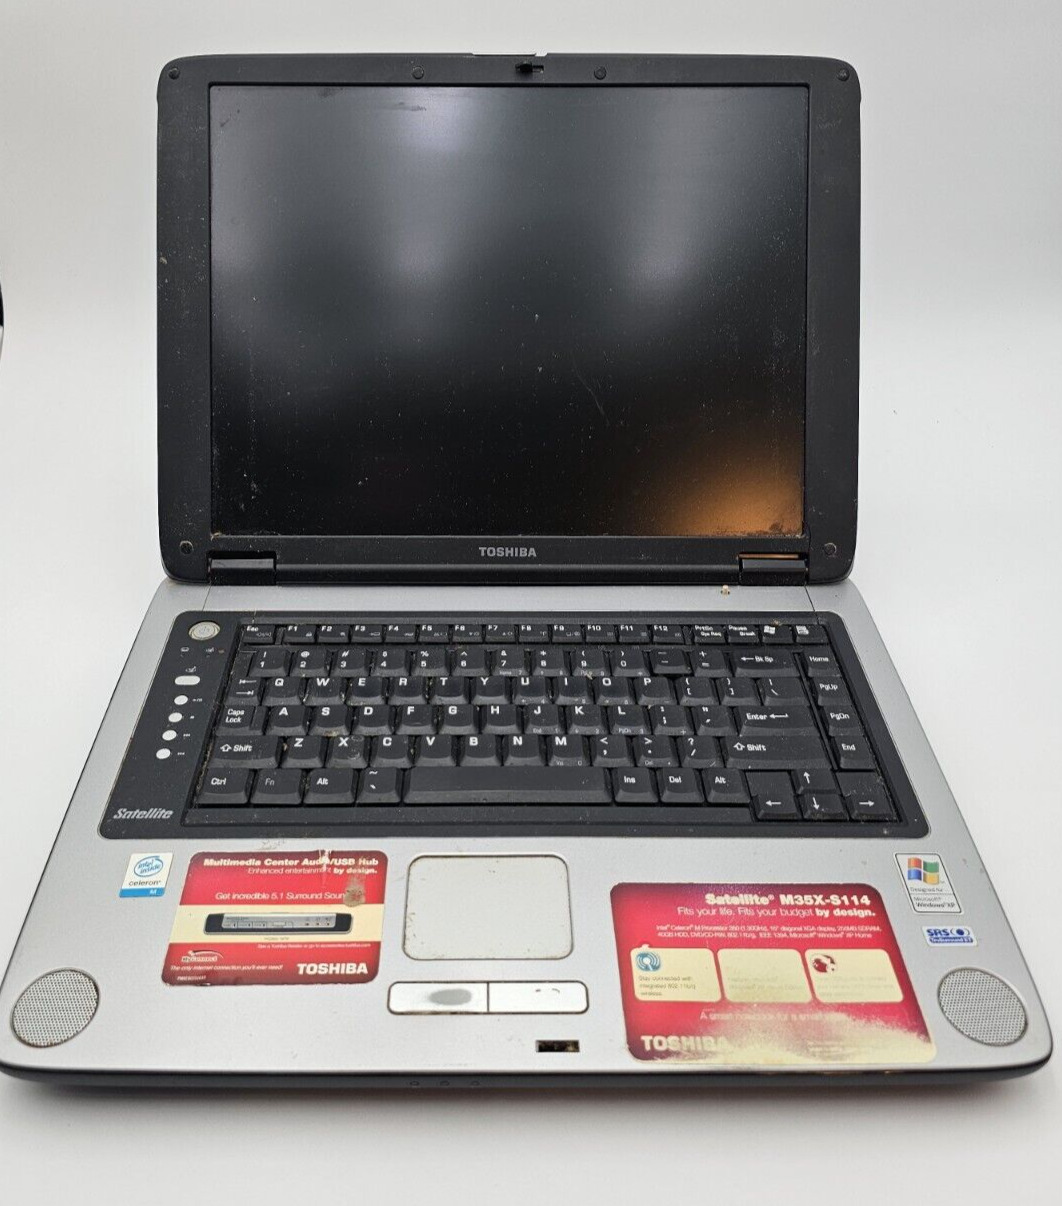 Toshiba Satellite M35X-S114 Laptop Intel Celeron (see description)